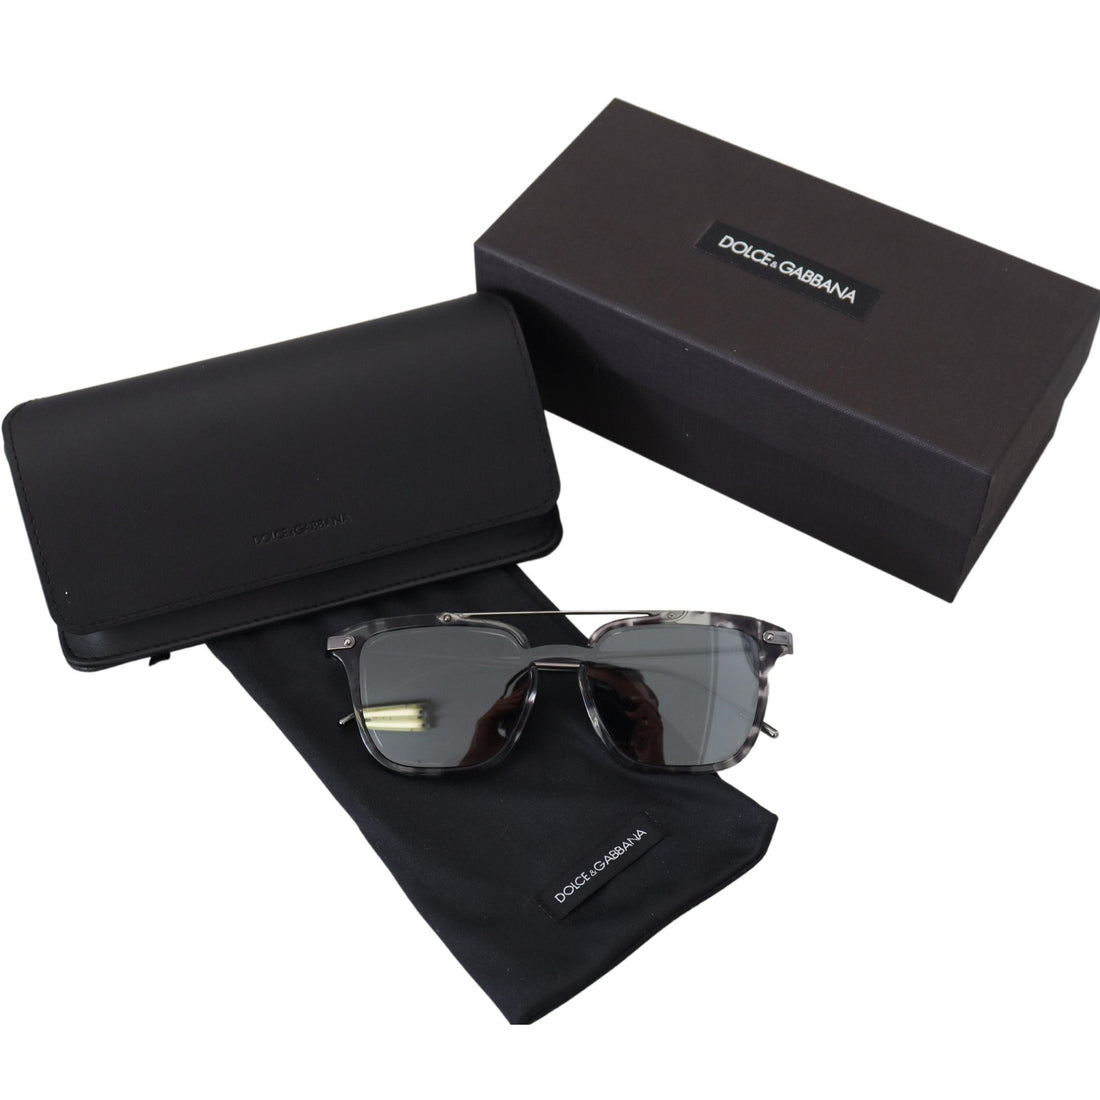 Dolce & Gabbana Stunning Grey Acetate Sunglasses